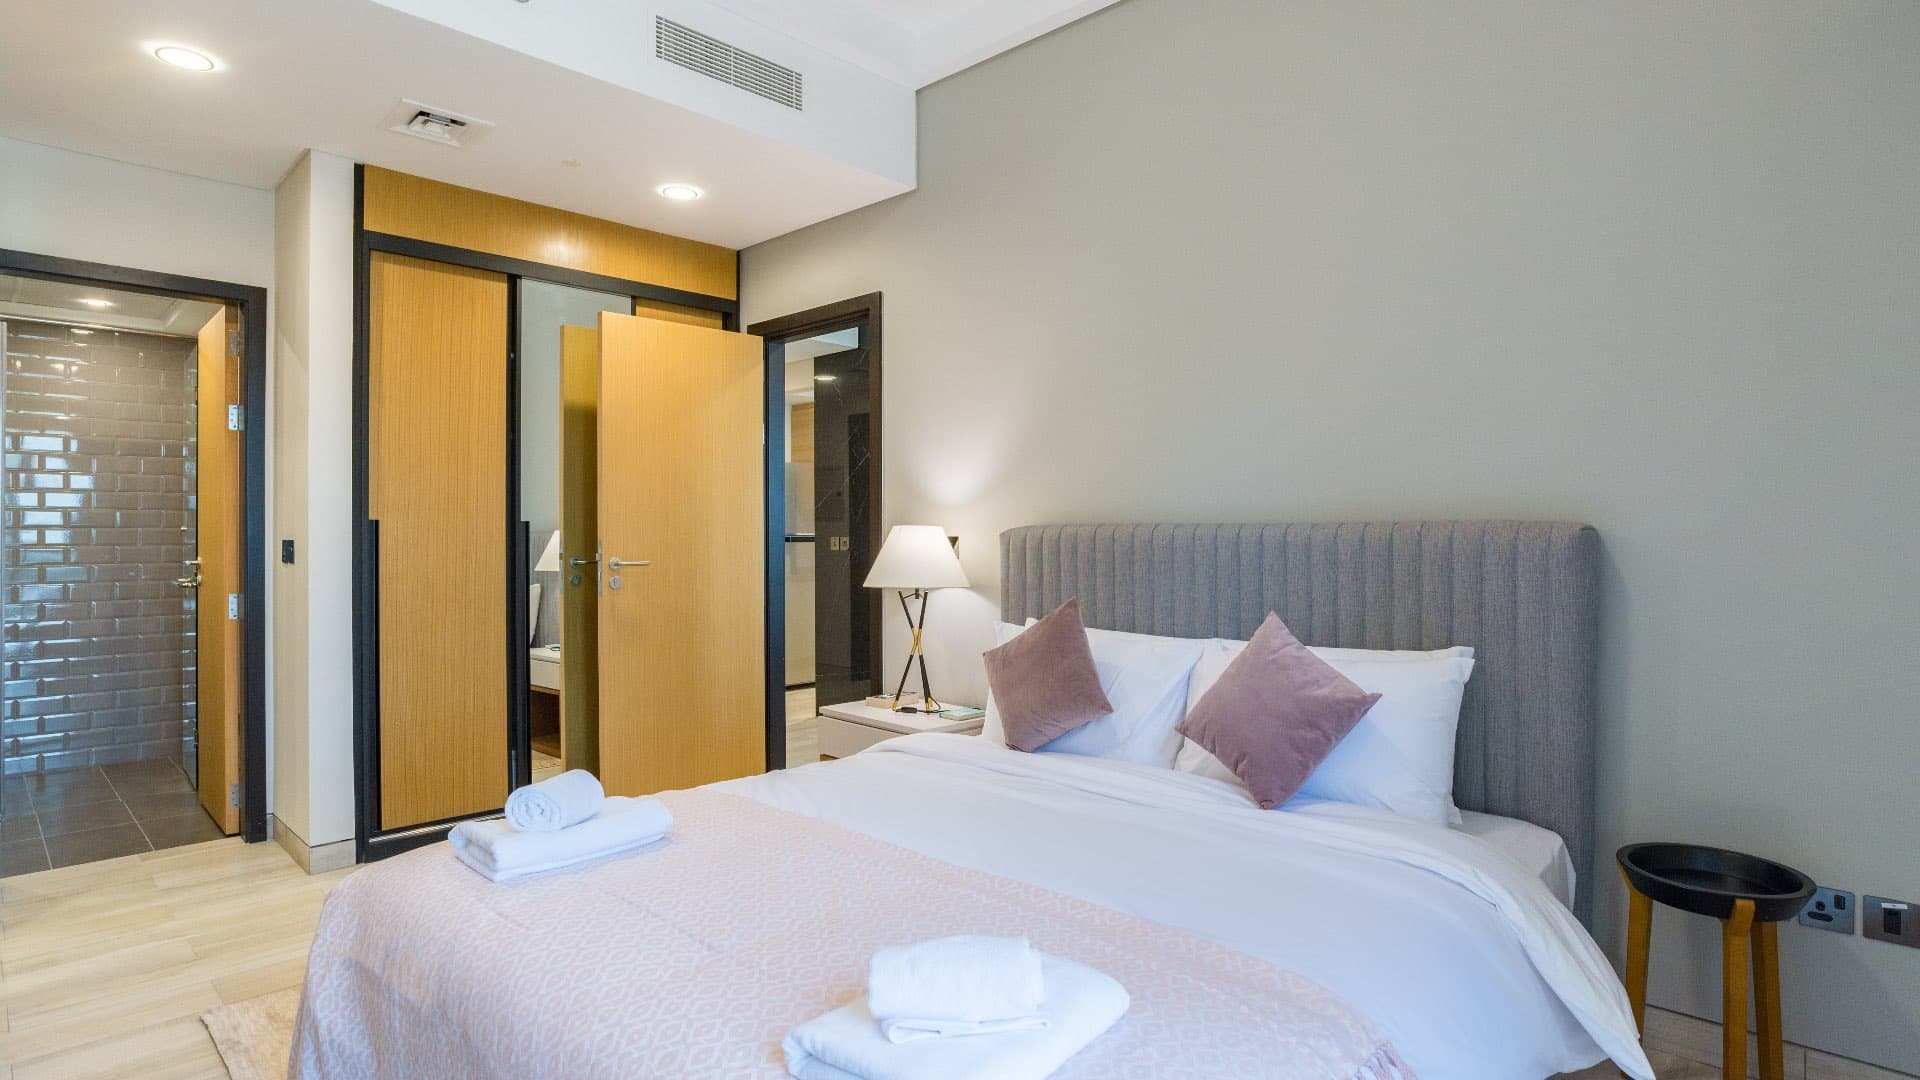  Bedroom Serviced Residences For Sale Al Barsha South Lp08406 1c5fc2b12e807300.jpg